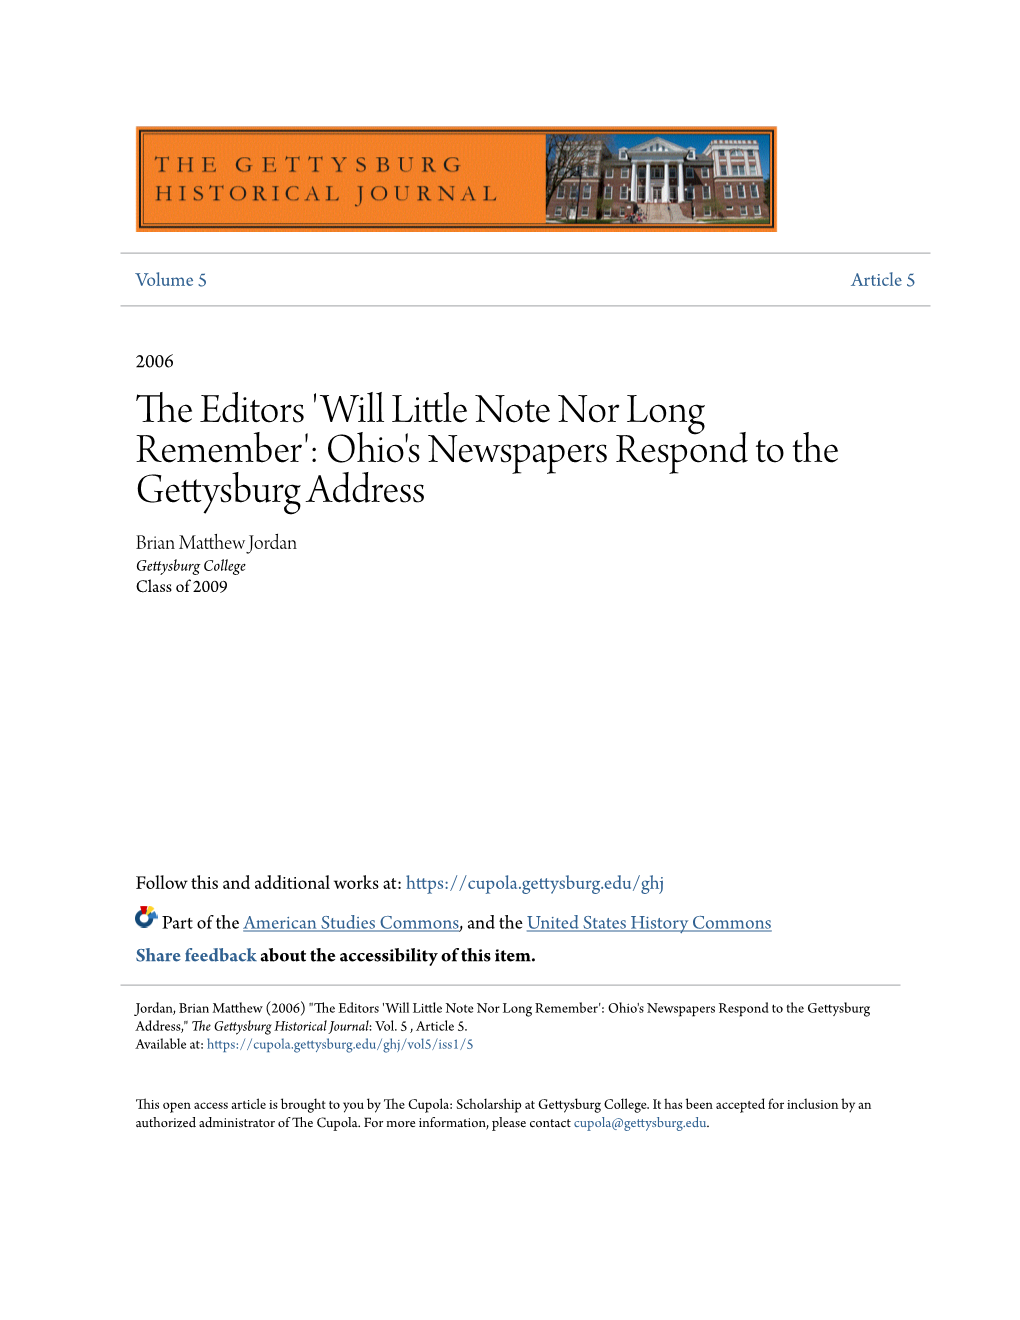 Ohio's Newspapers Respond to the Gettysburg Address Brian Matthew Orj Dan Gettysburg College Class of 2009